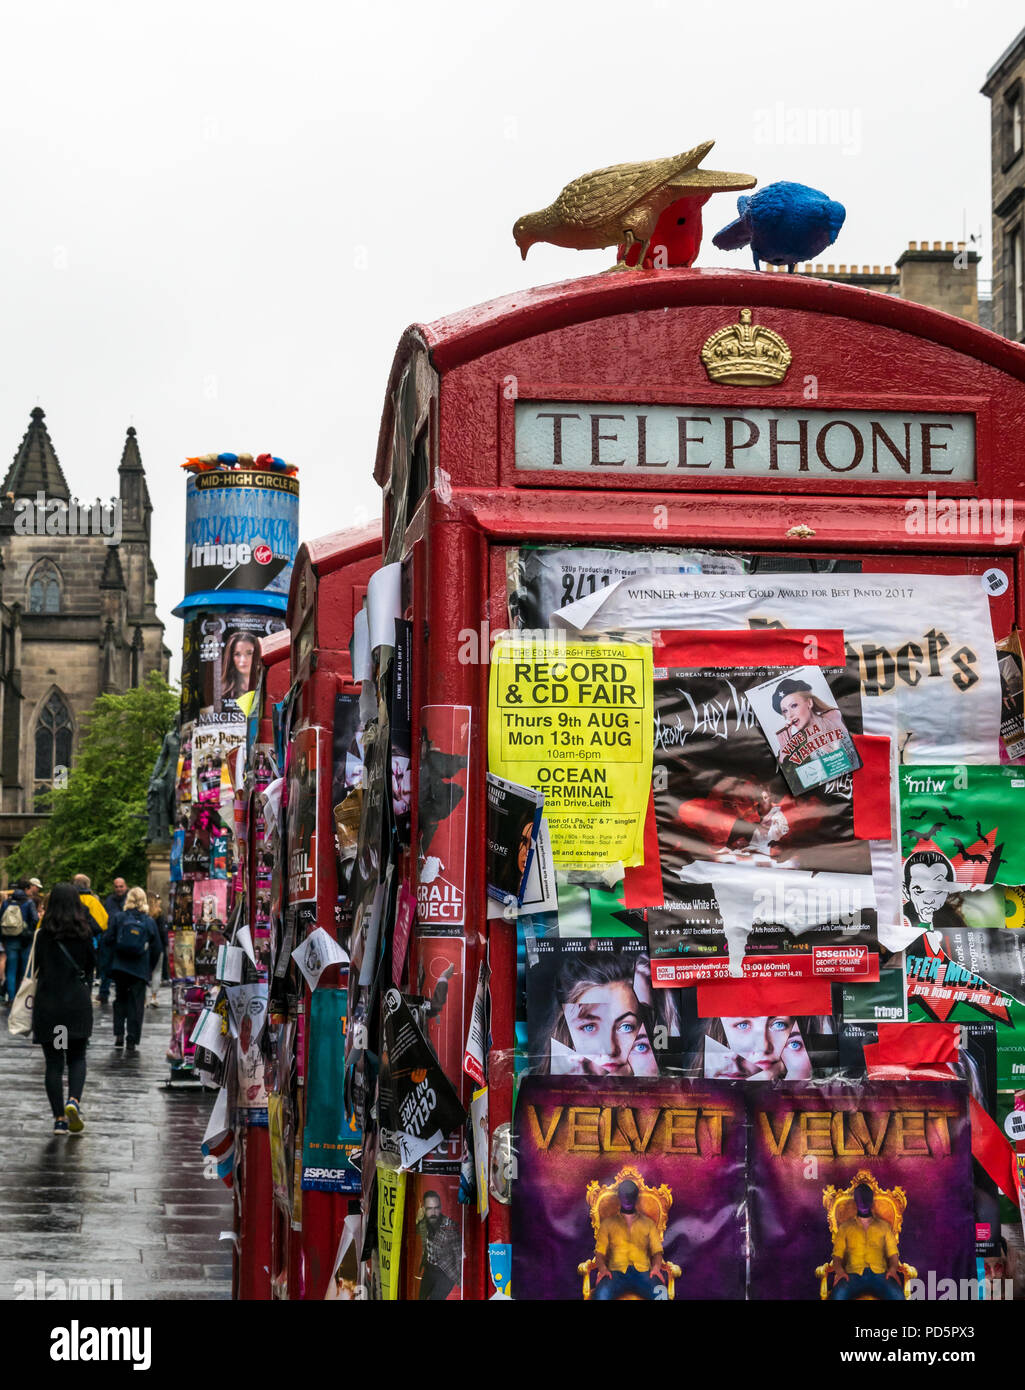 Virgin Money sponsored outdoor fringe venue, Royal Mile, Edinburgh, Scotland, UK with disused red telephone boxes covered in Fringe flyers Stock Photo